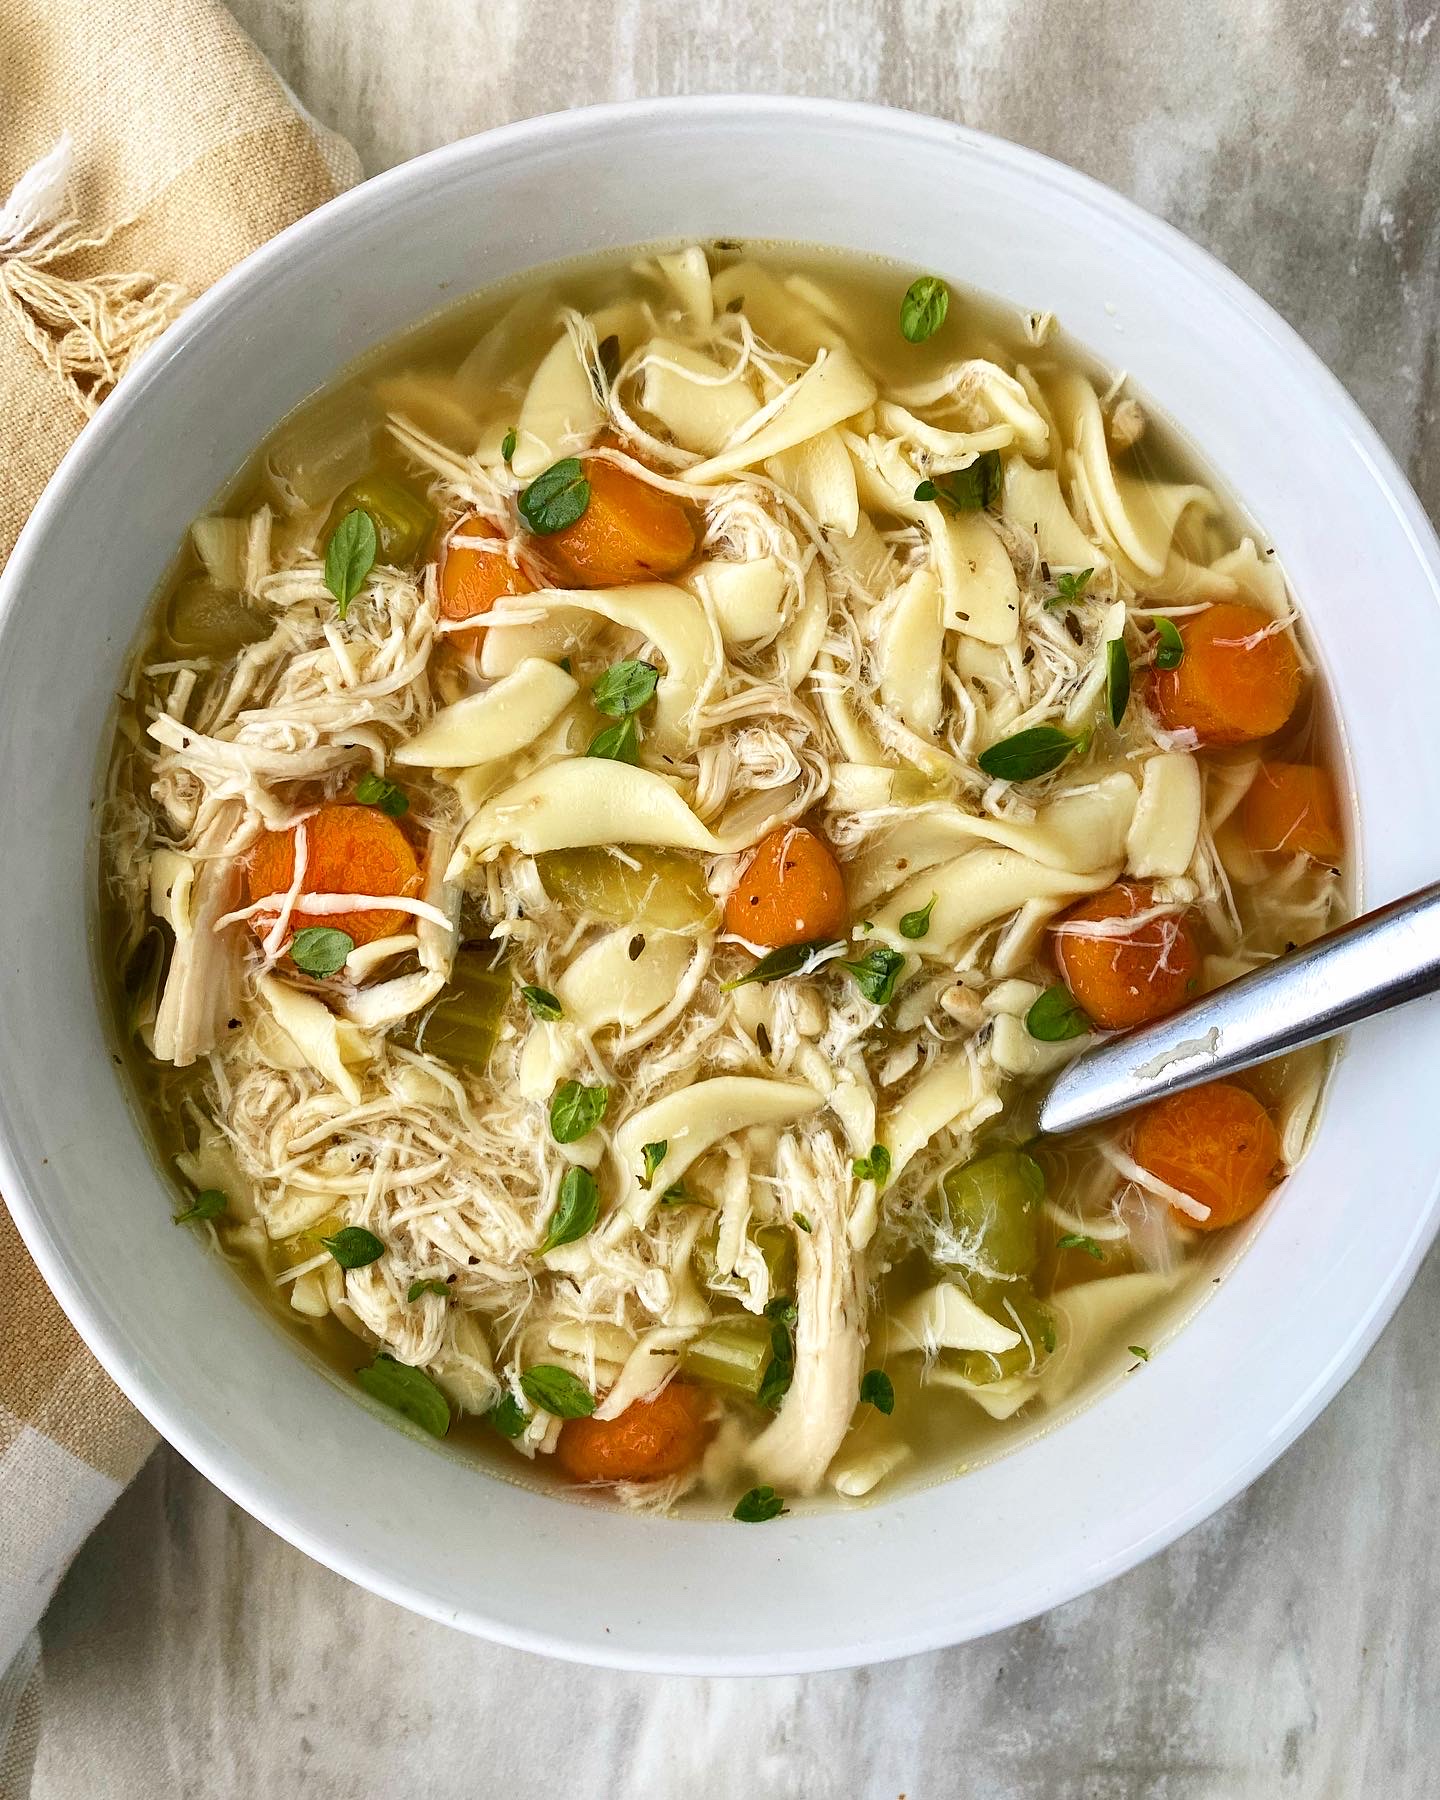 Gluten-Free Chicken Noodle Soup » Stovetop, Instant Pot, Slow Cooker